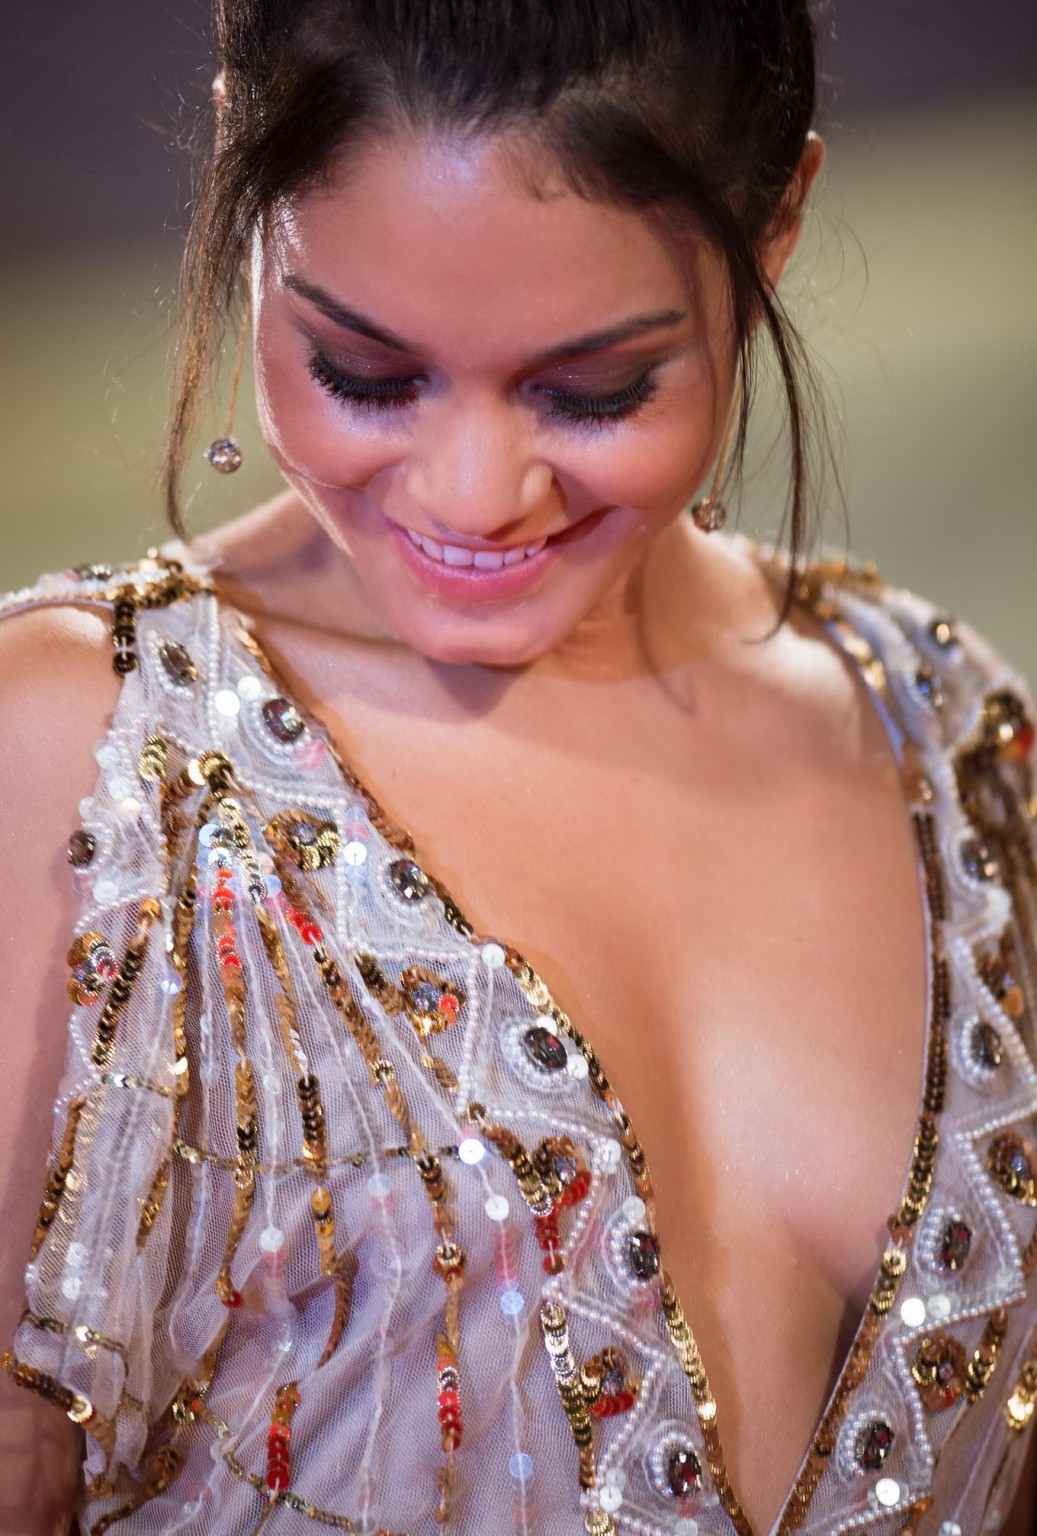 Vanessa Hudgens braless showing cleavage at 'Spring Breakers' premiere in Venice #75253338